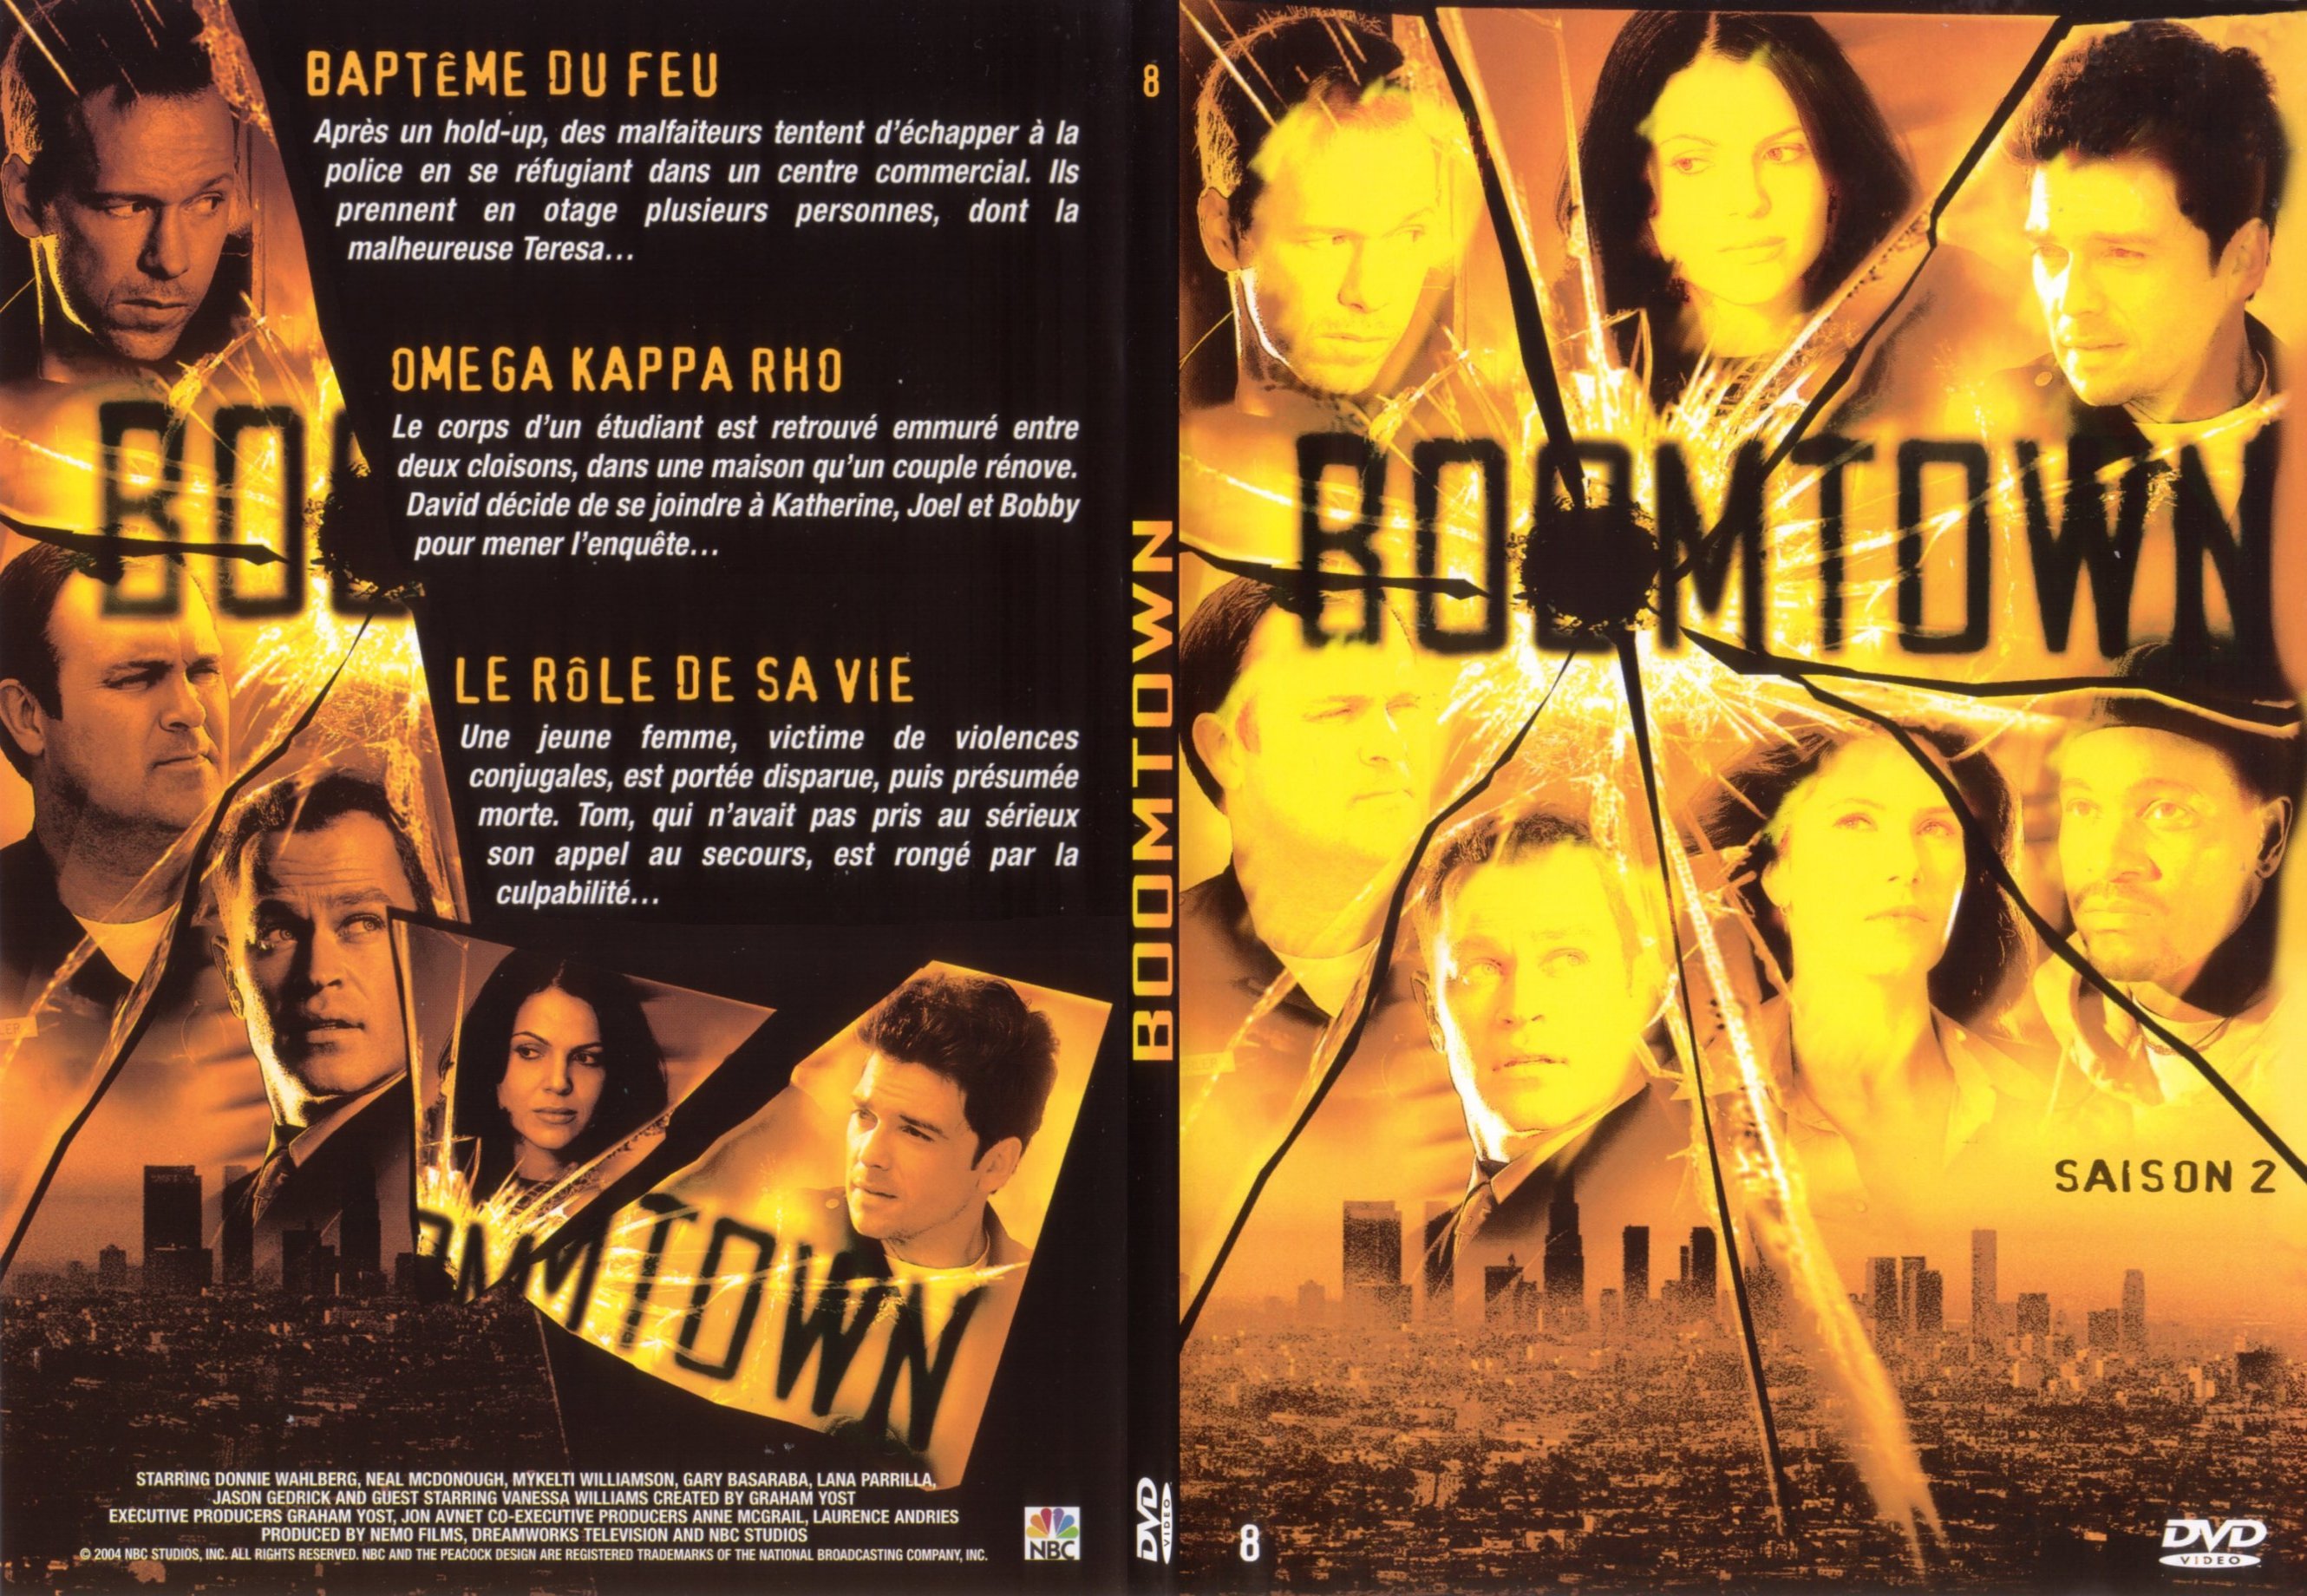 Jaquette DVD Boomtown Saison 2 DVD 8